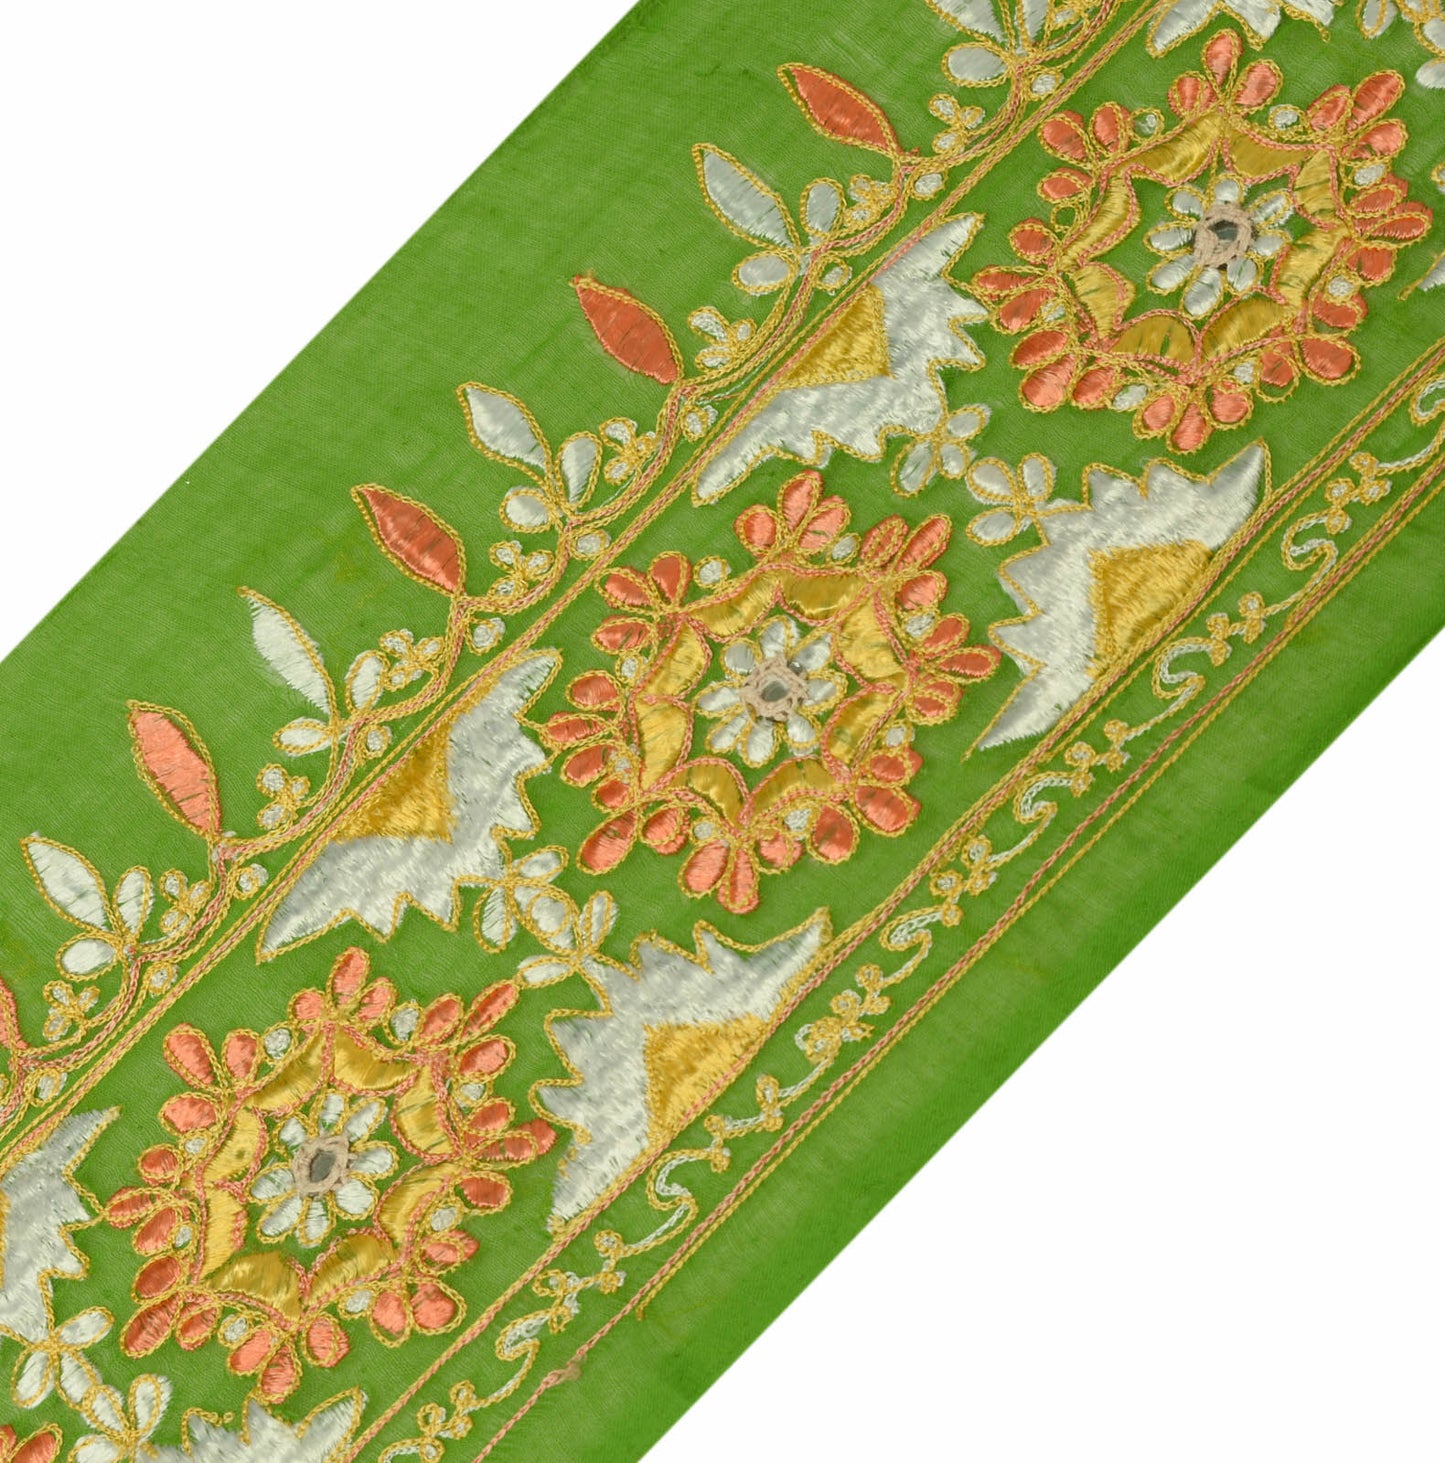 Sushila Vintage Green Sari Border Indian Craft Sewing Trim Embroidered Lace